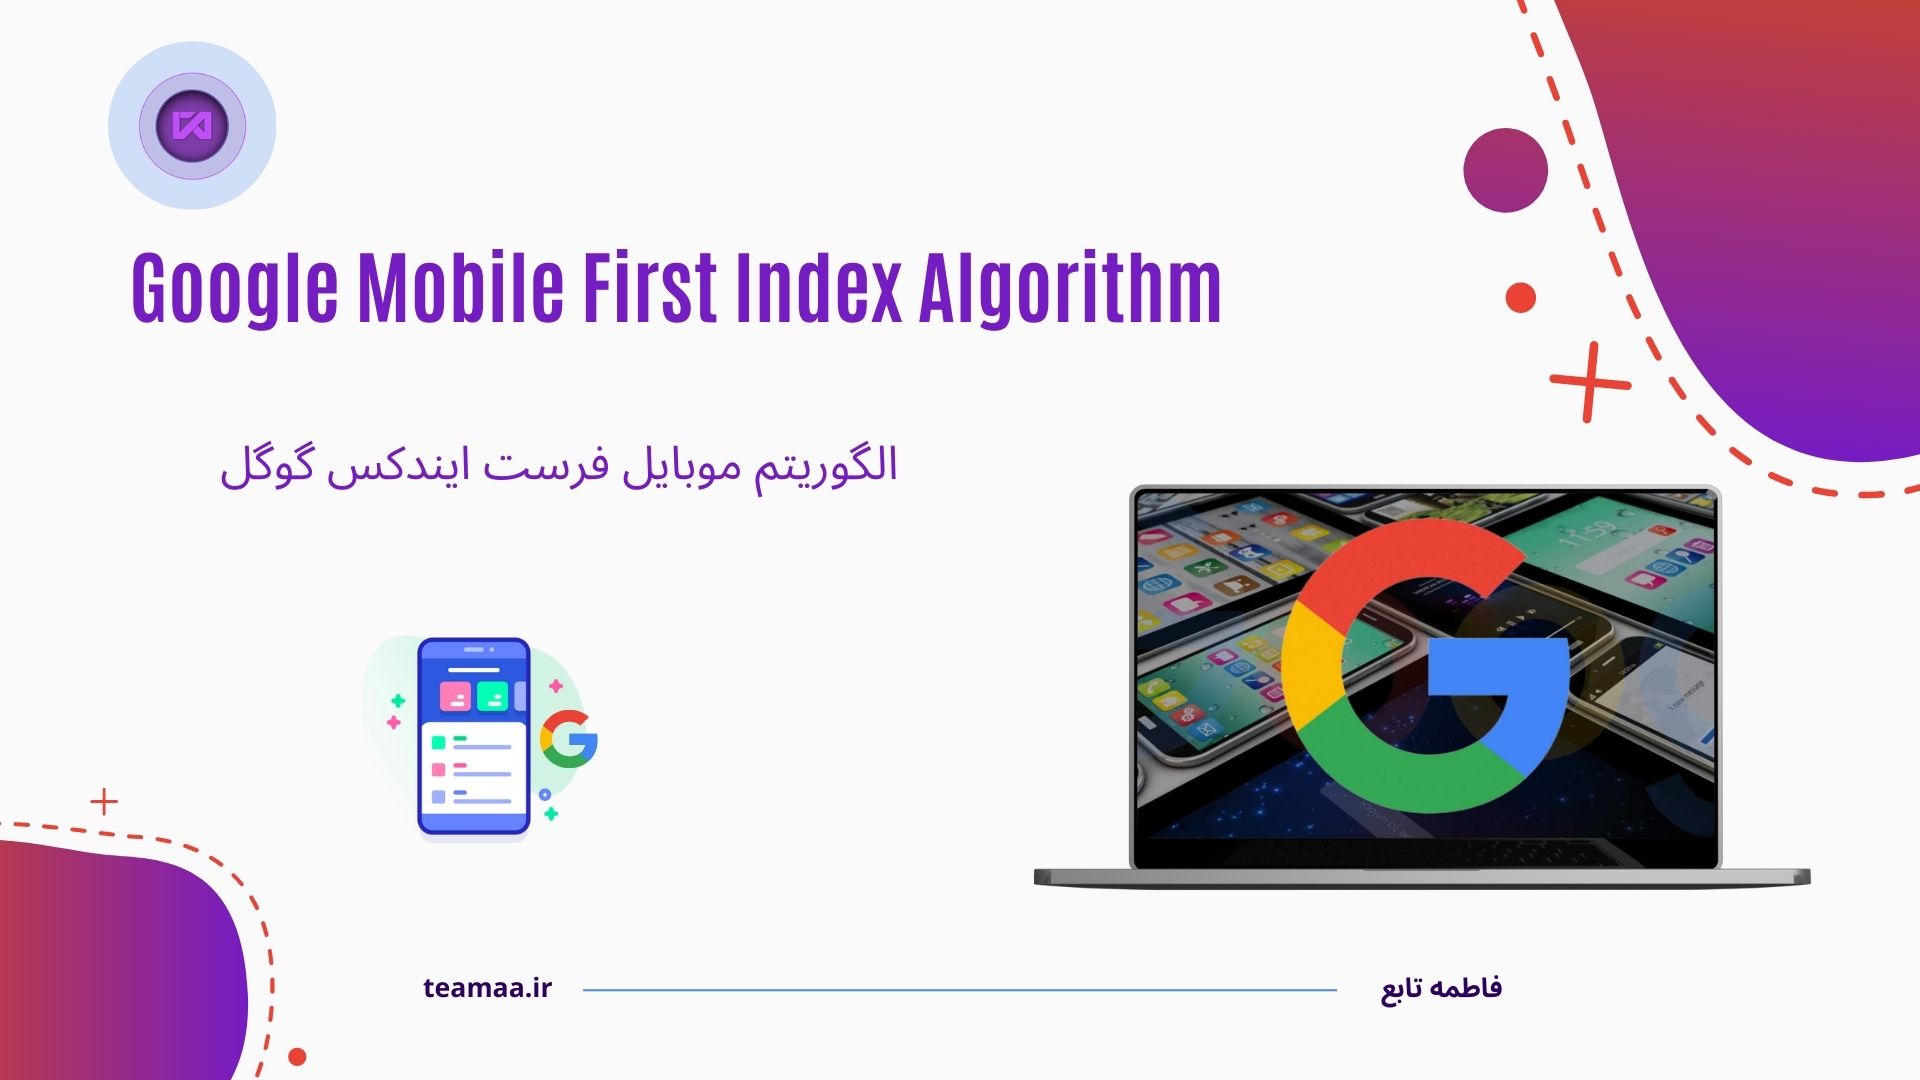 الگوریتم موبایل فرست ایندکس (mobile-first index) گوگل